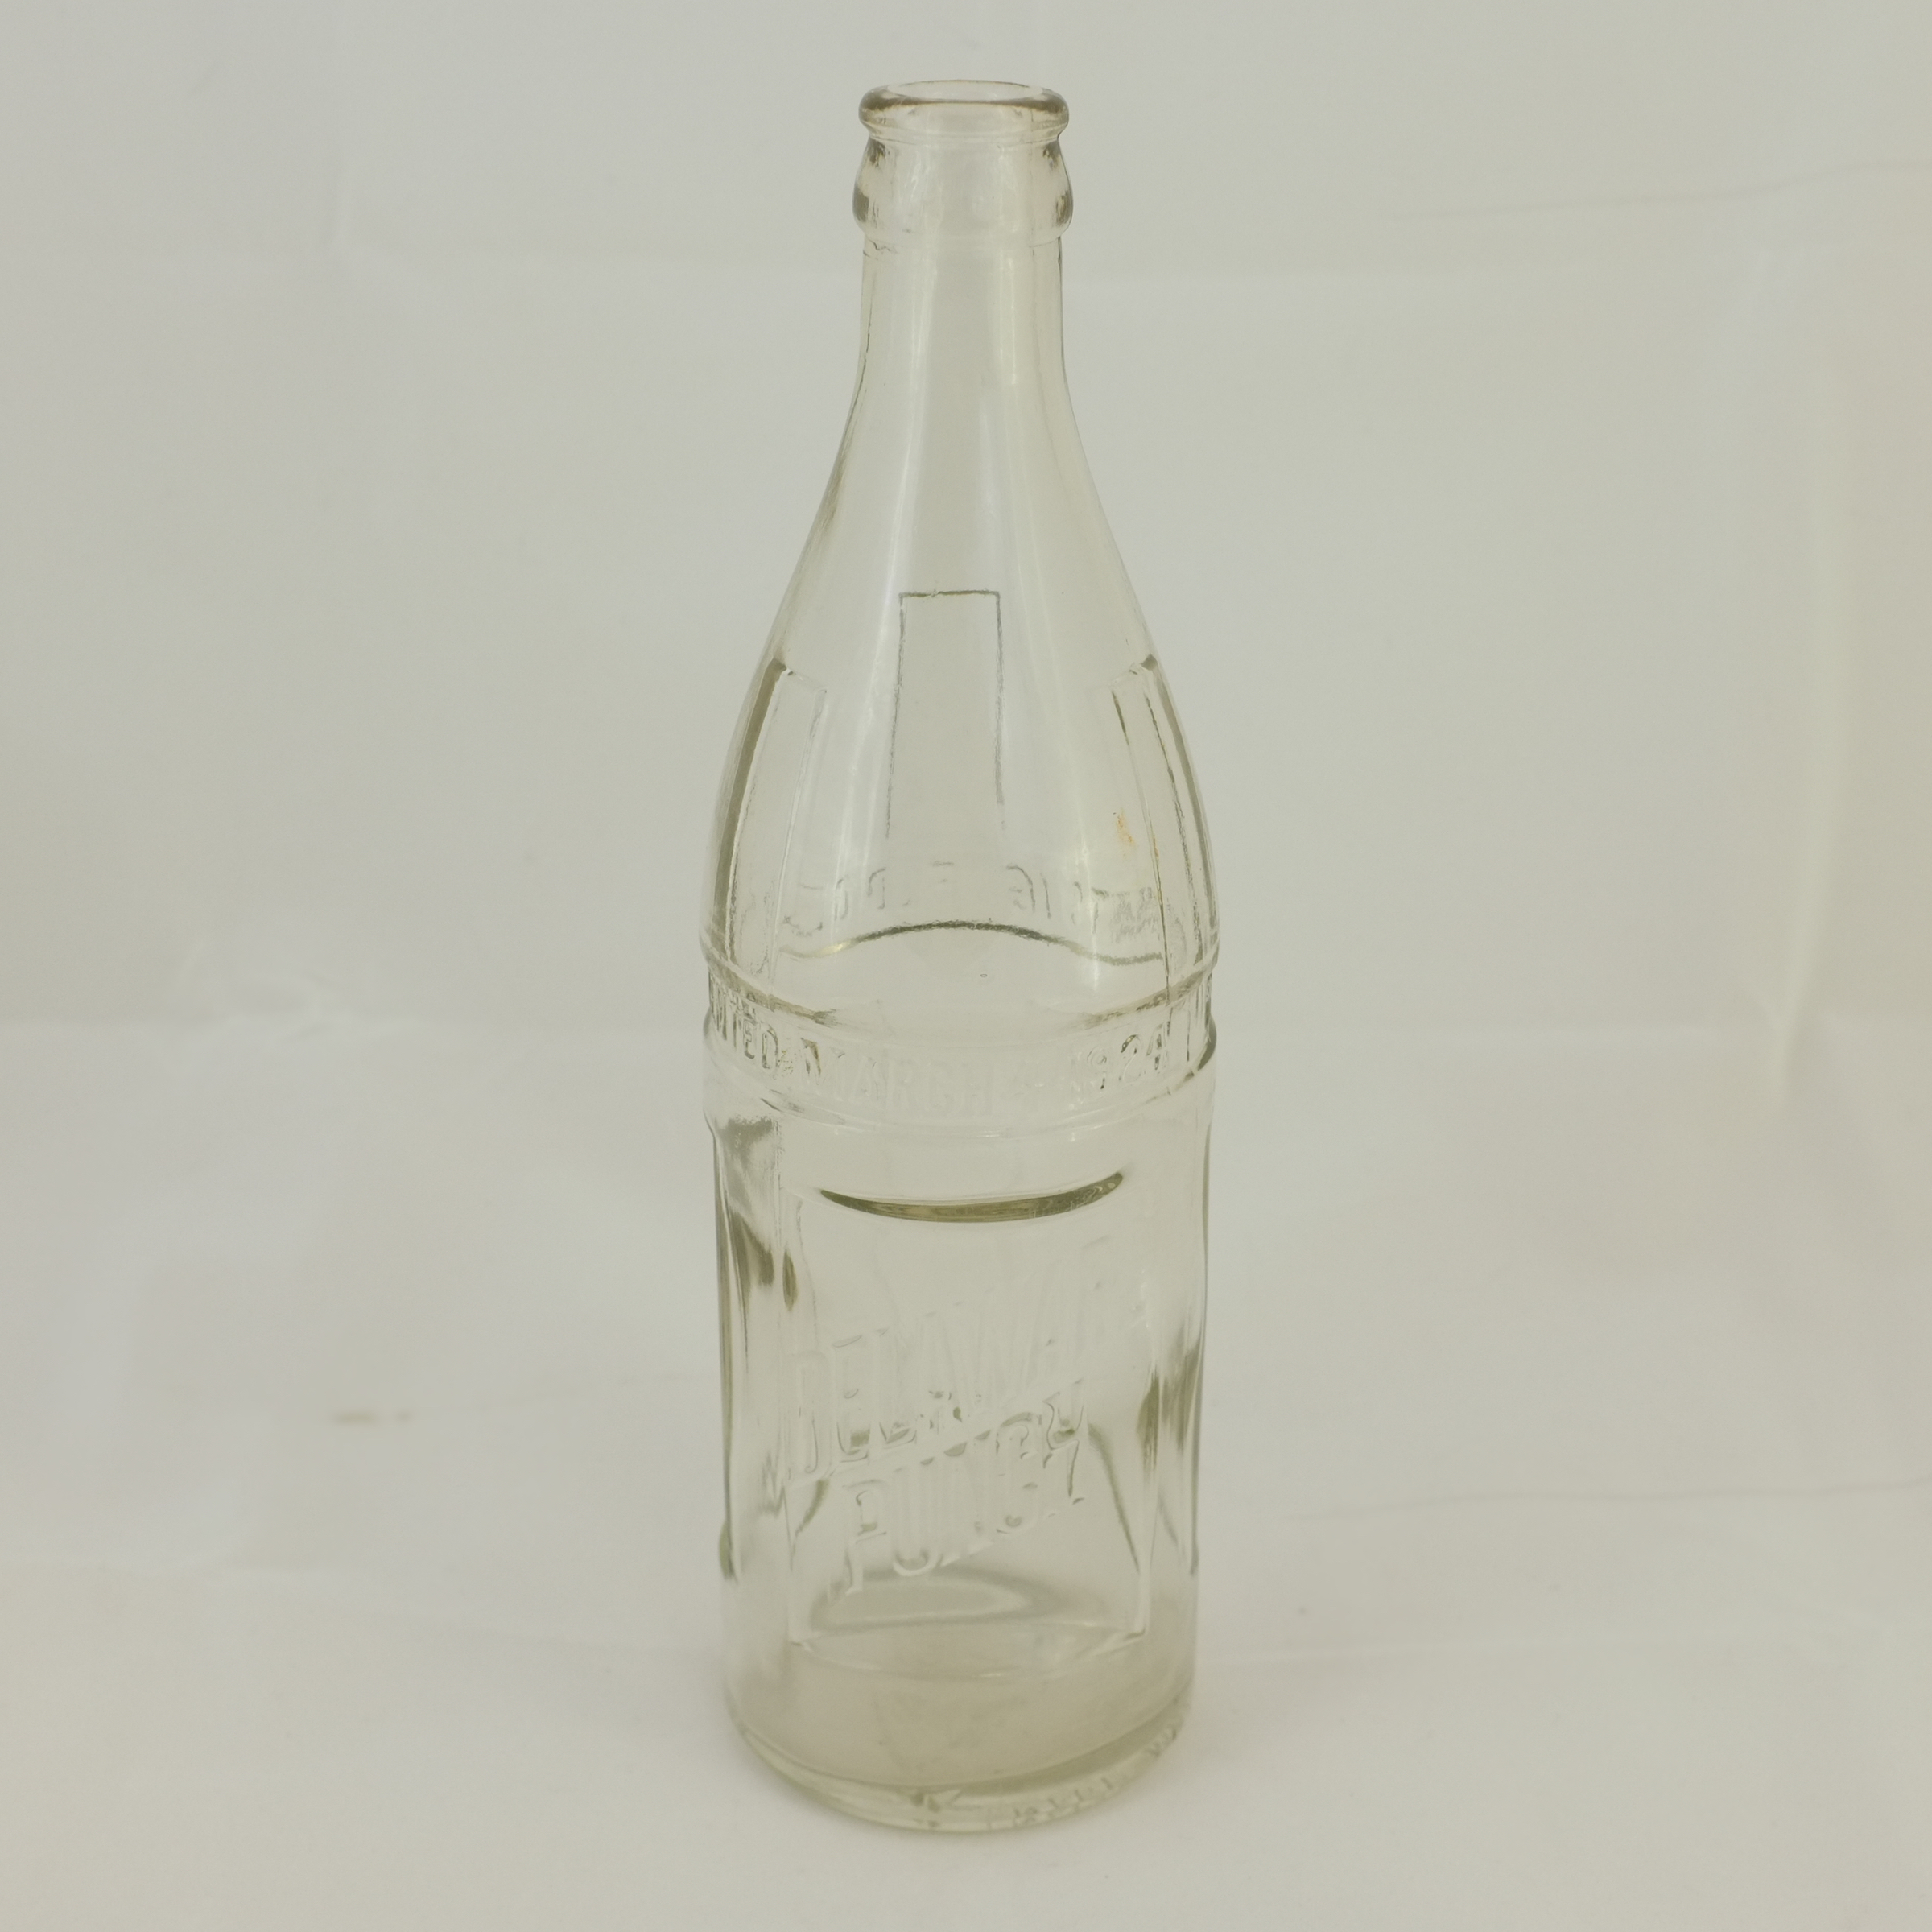 Delaware Punch Bottle